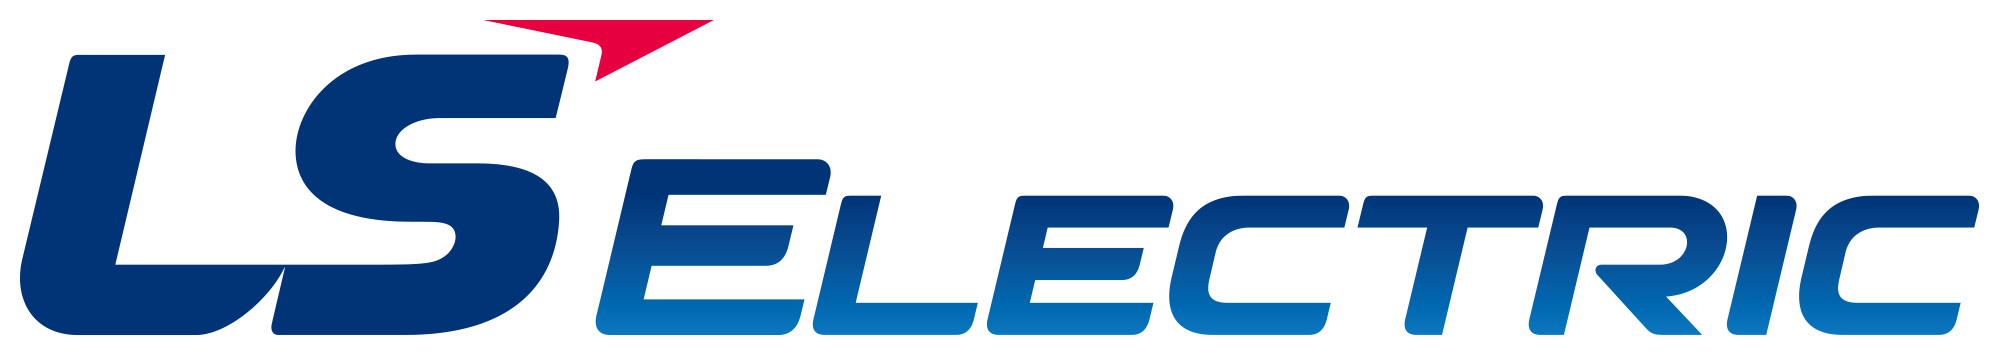 LS ELECTRIC | Электронные компоненты. Дистрибьютор и магазин онлайн -  Transfer Multisort Elektronik